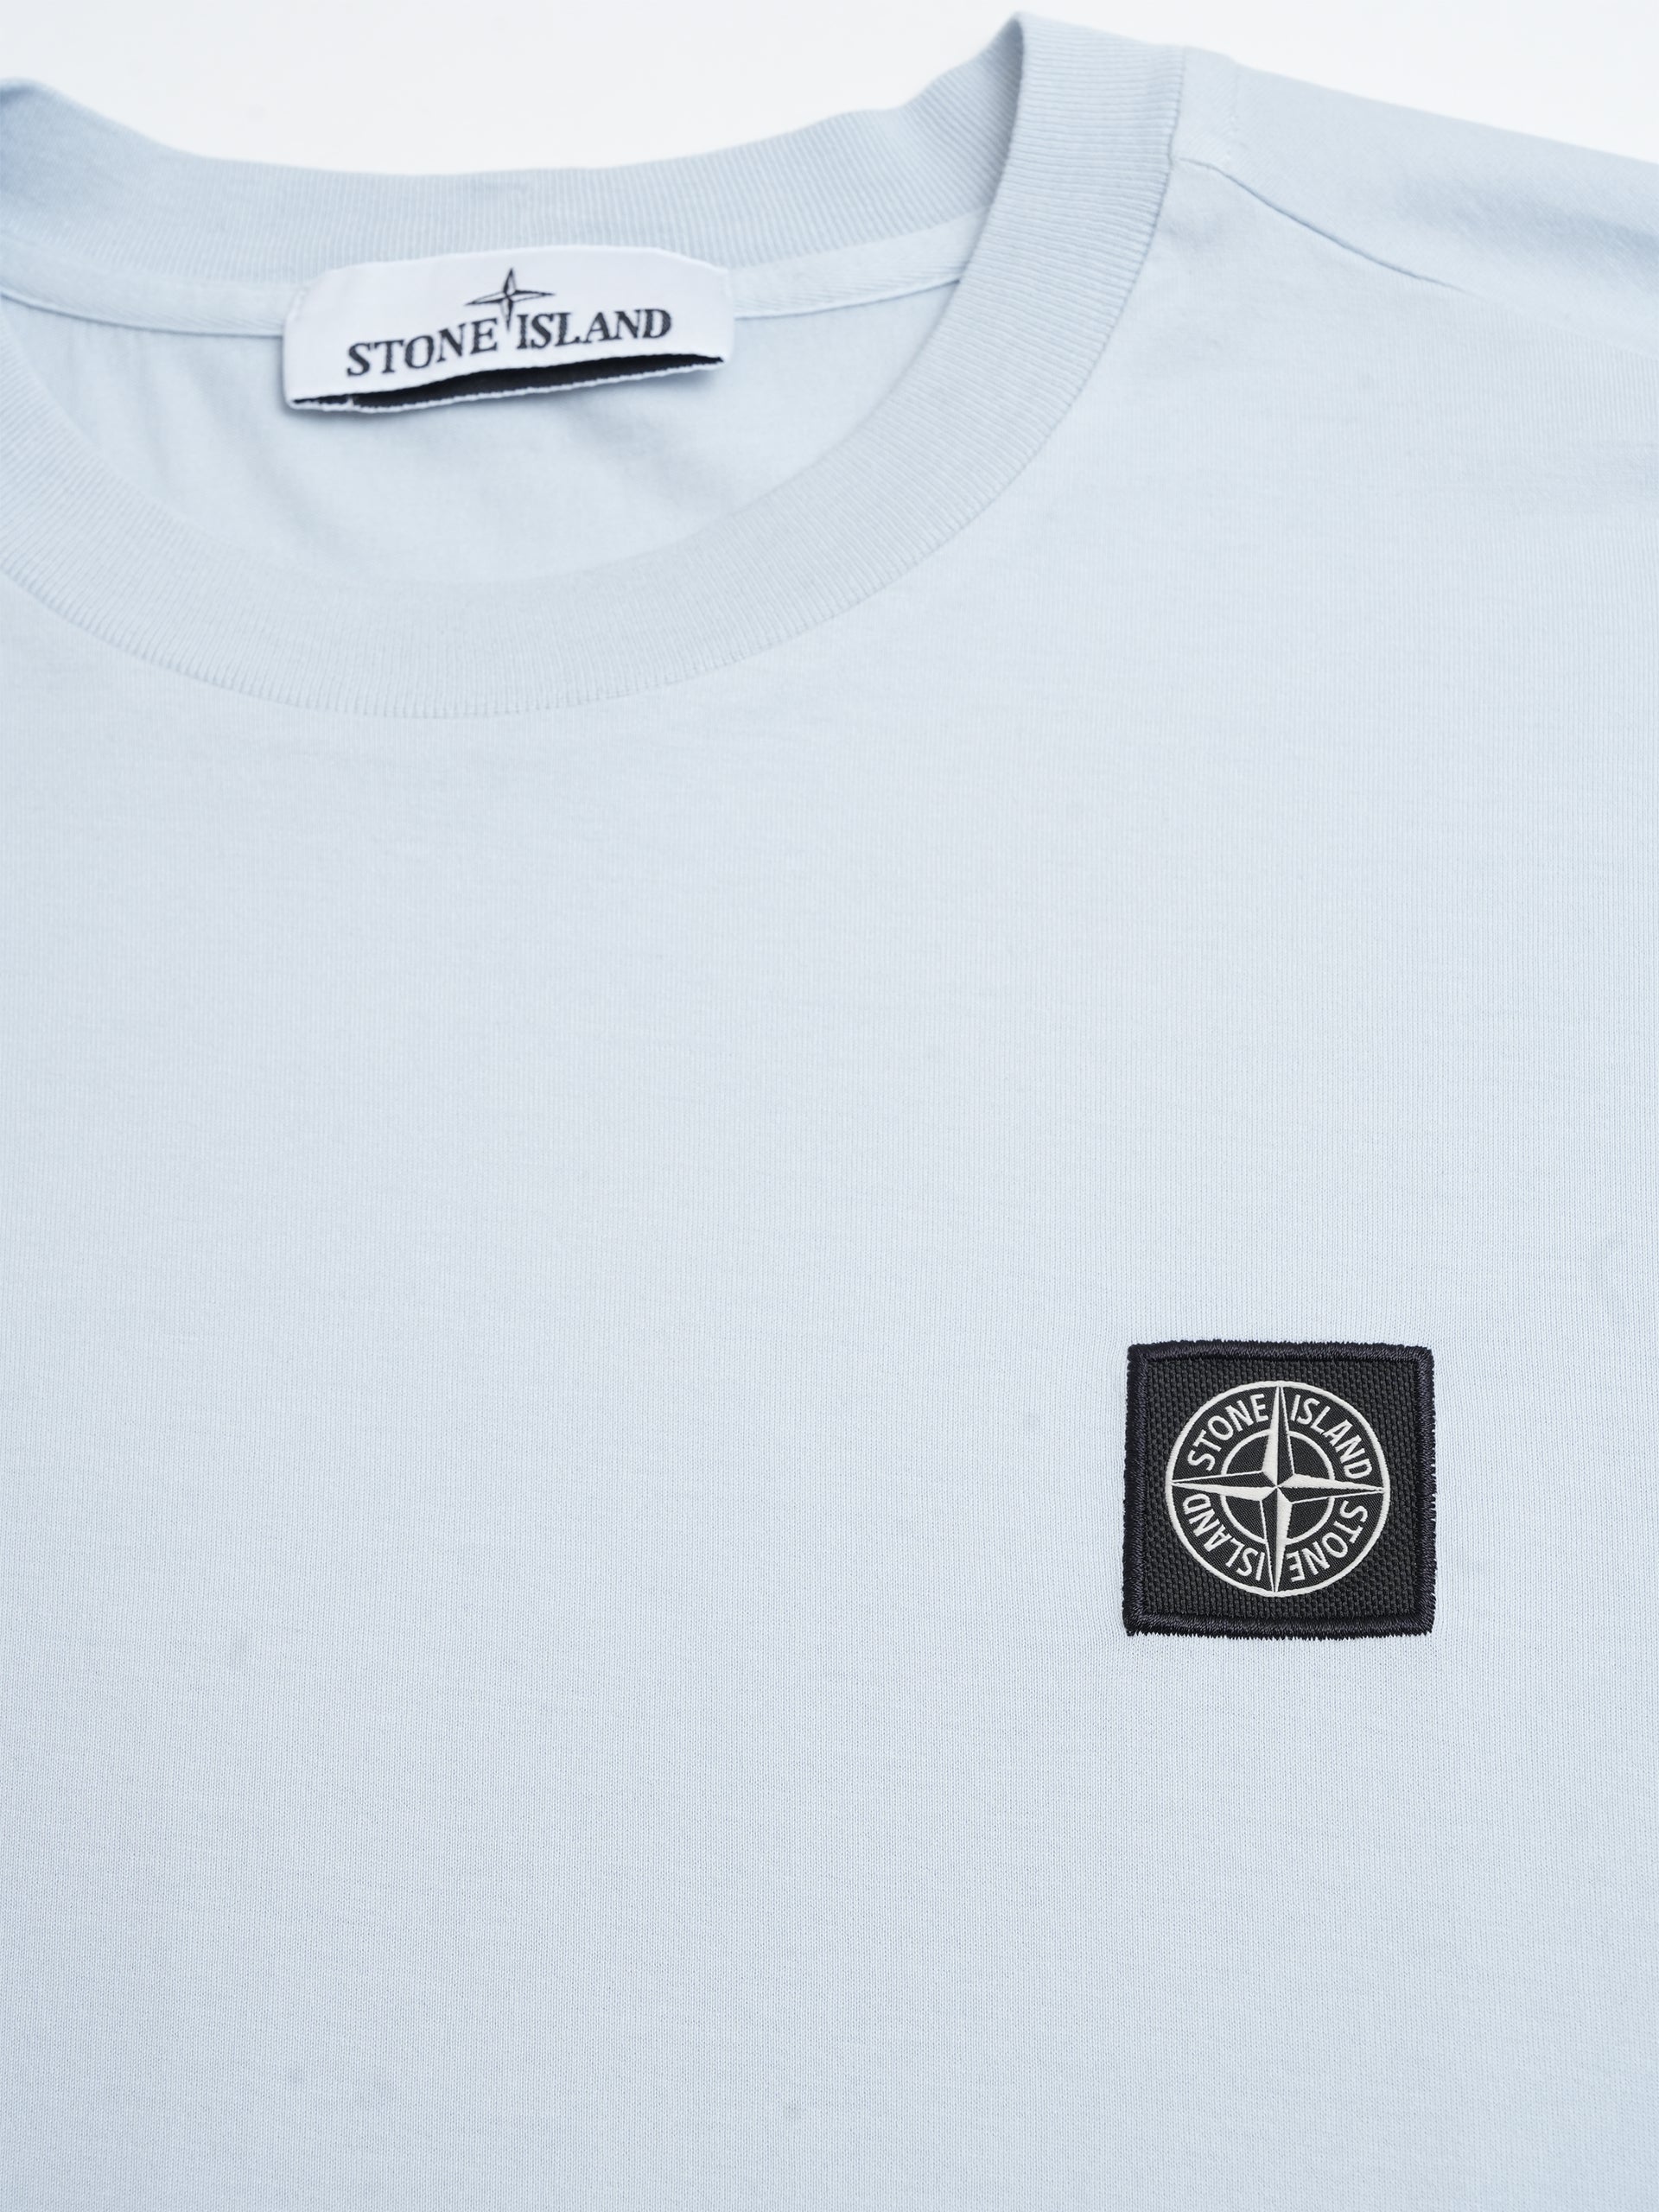 STONE ISLAND - T-Shirt mit Kompass-Patch Hellblau – Light blue